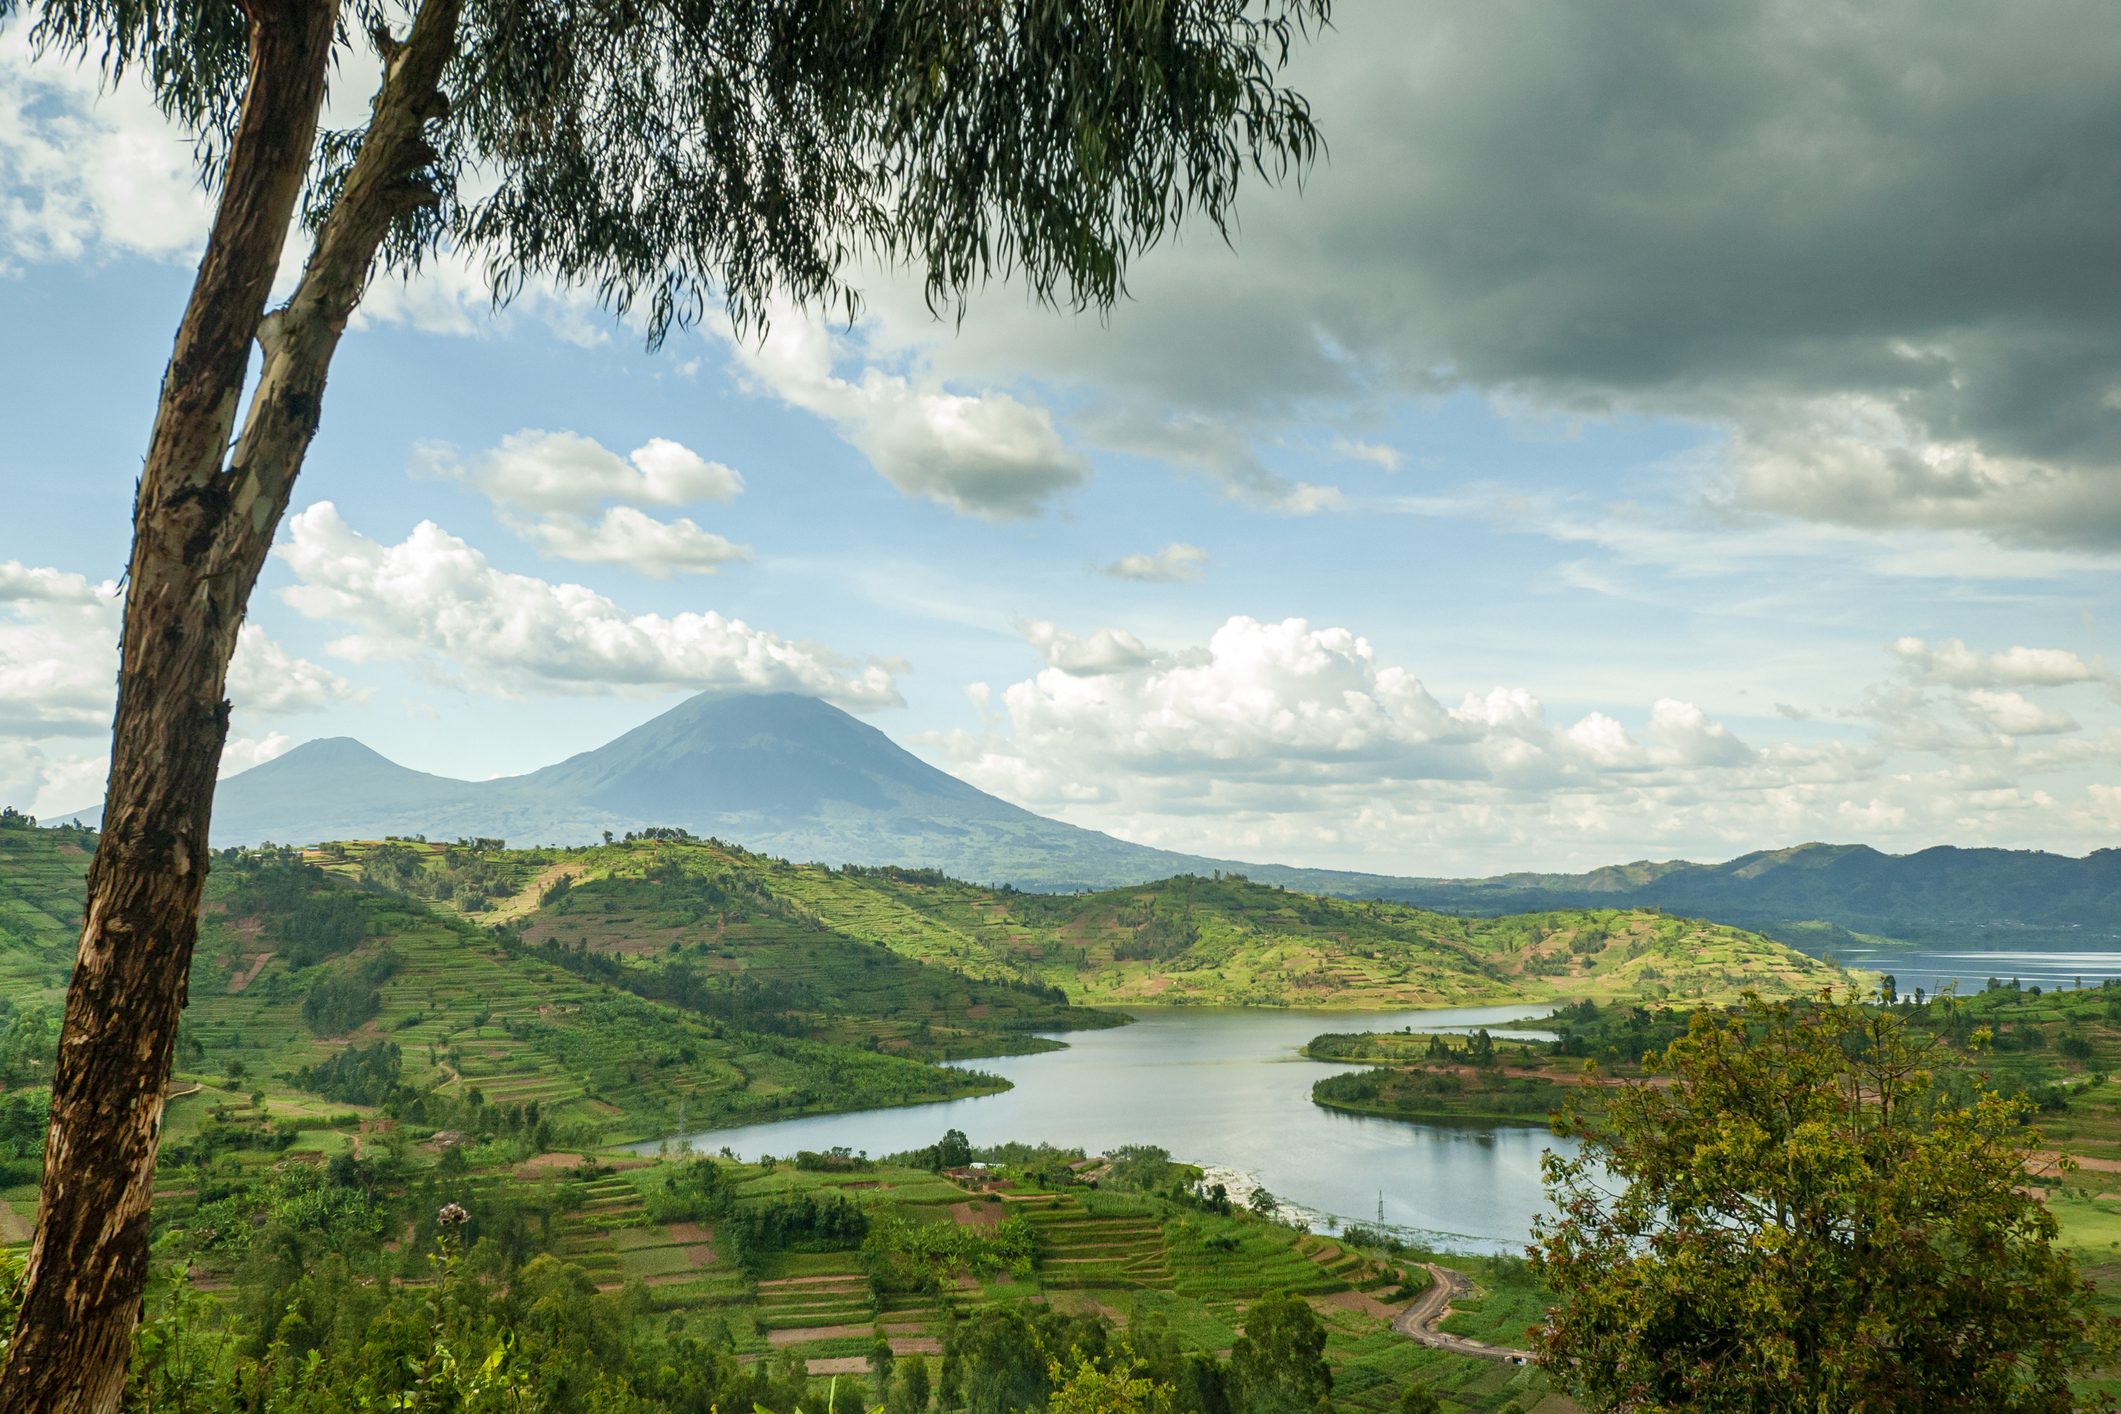 Landscape of the Virunga Mountains in Rwanda